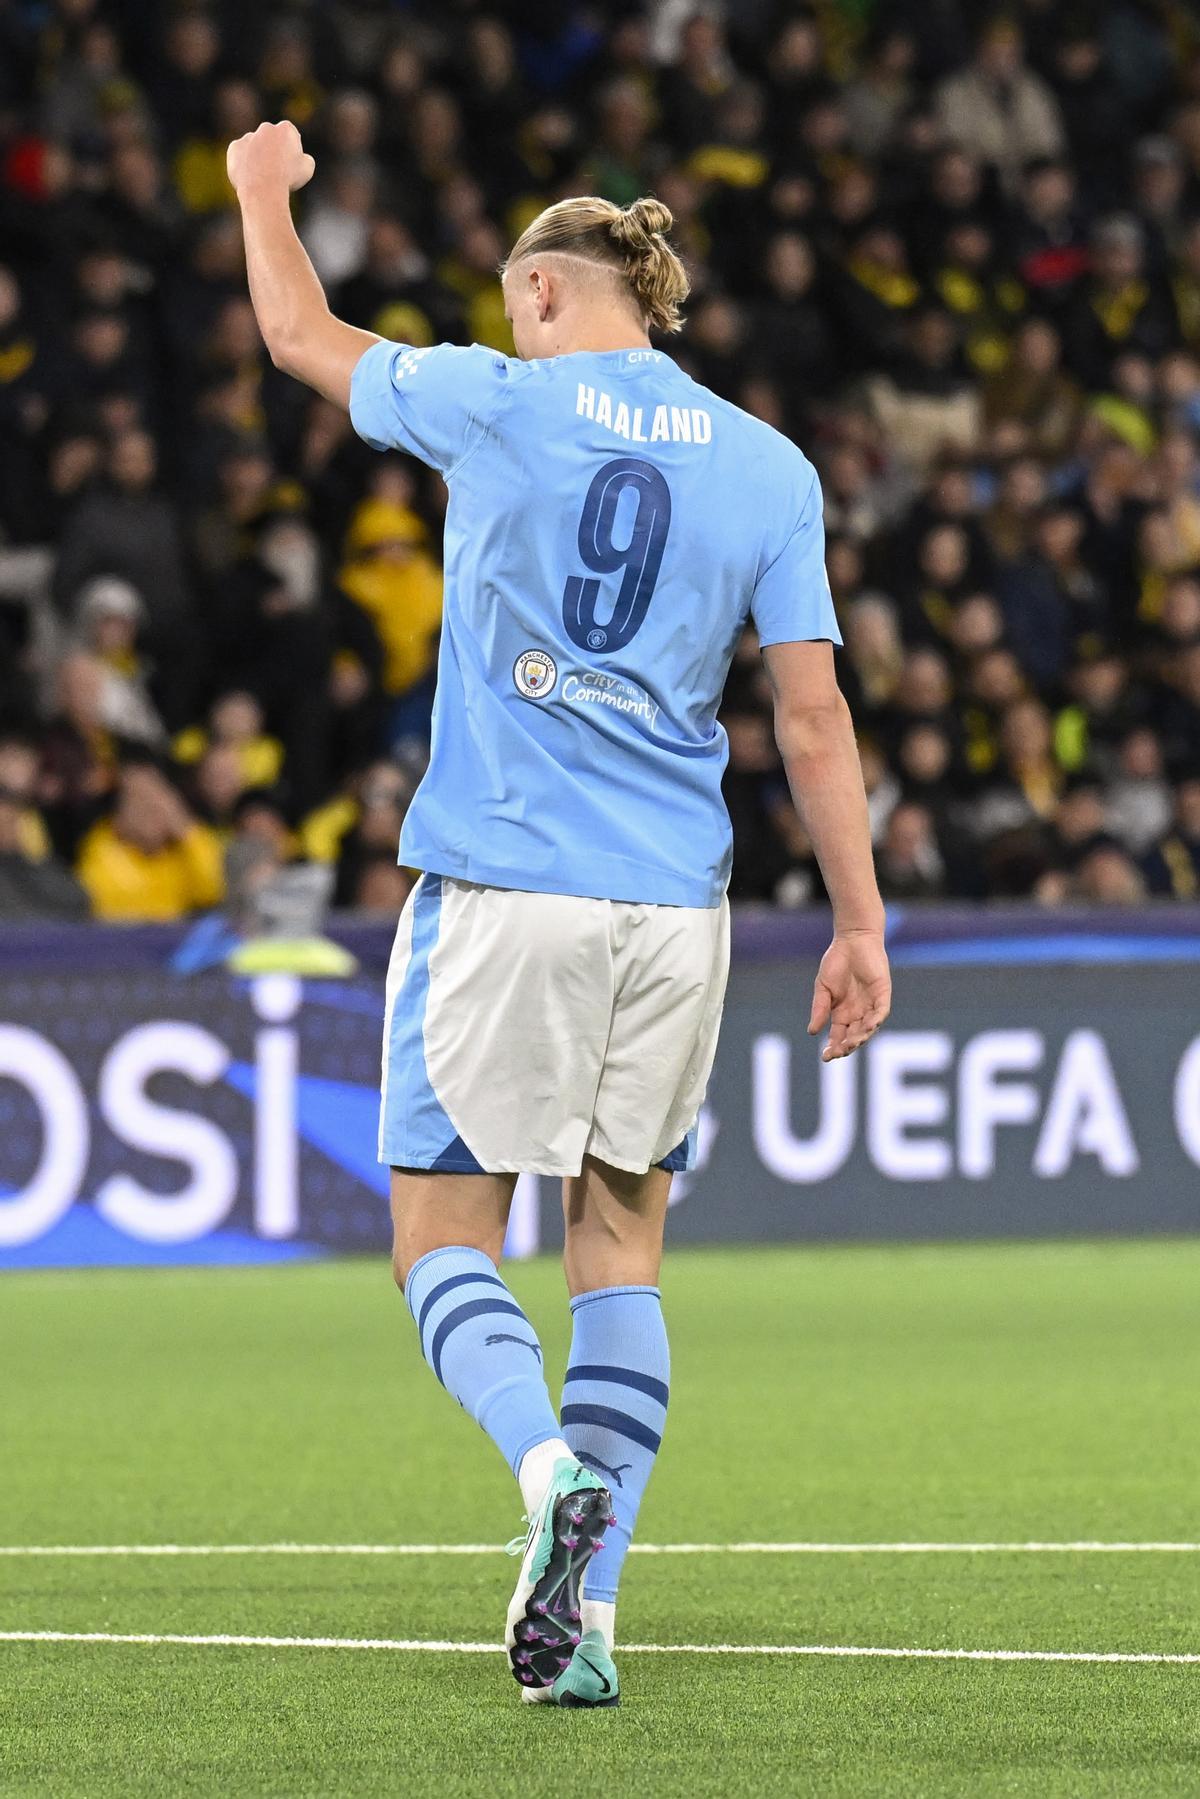 Young Boys - Manchester City: El segundo gol de Haaland